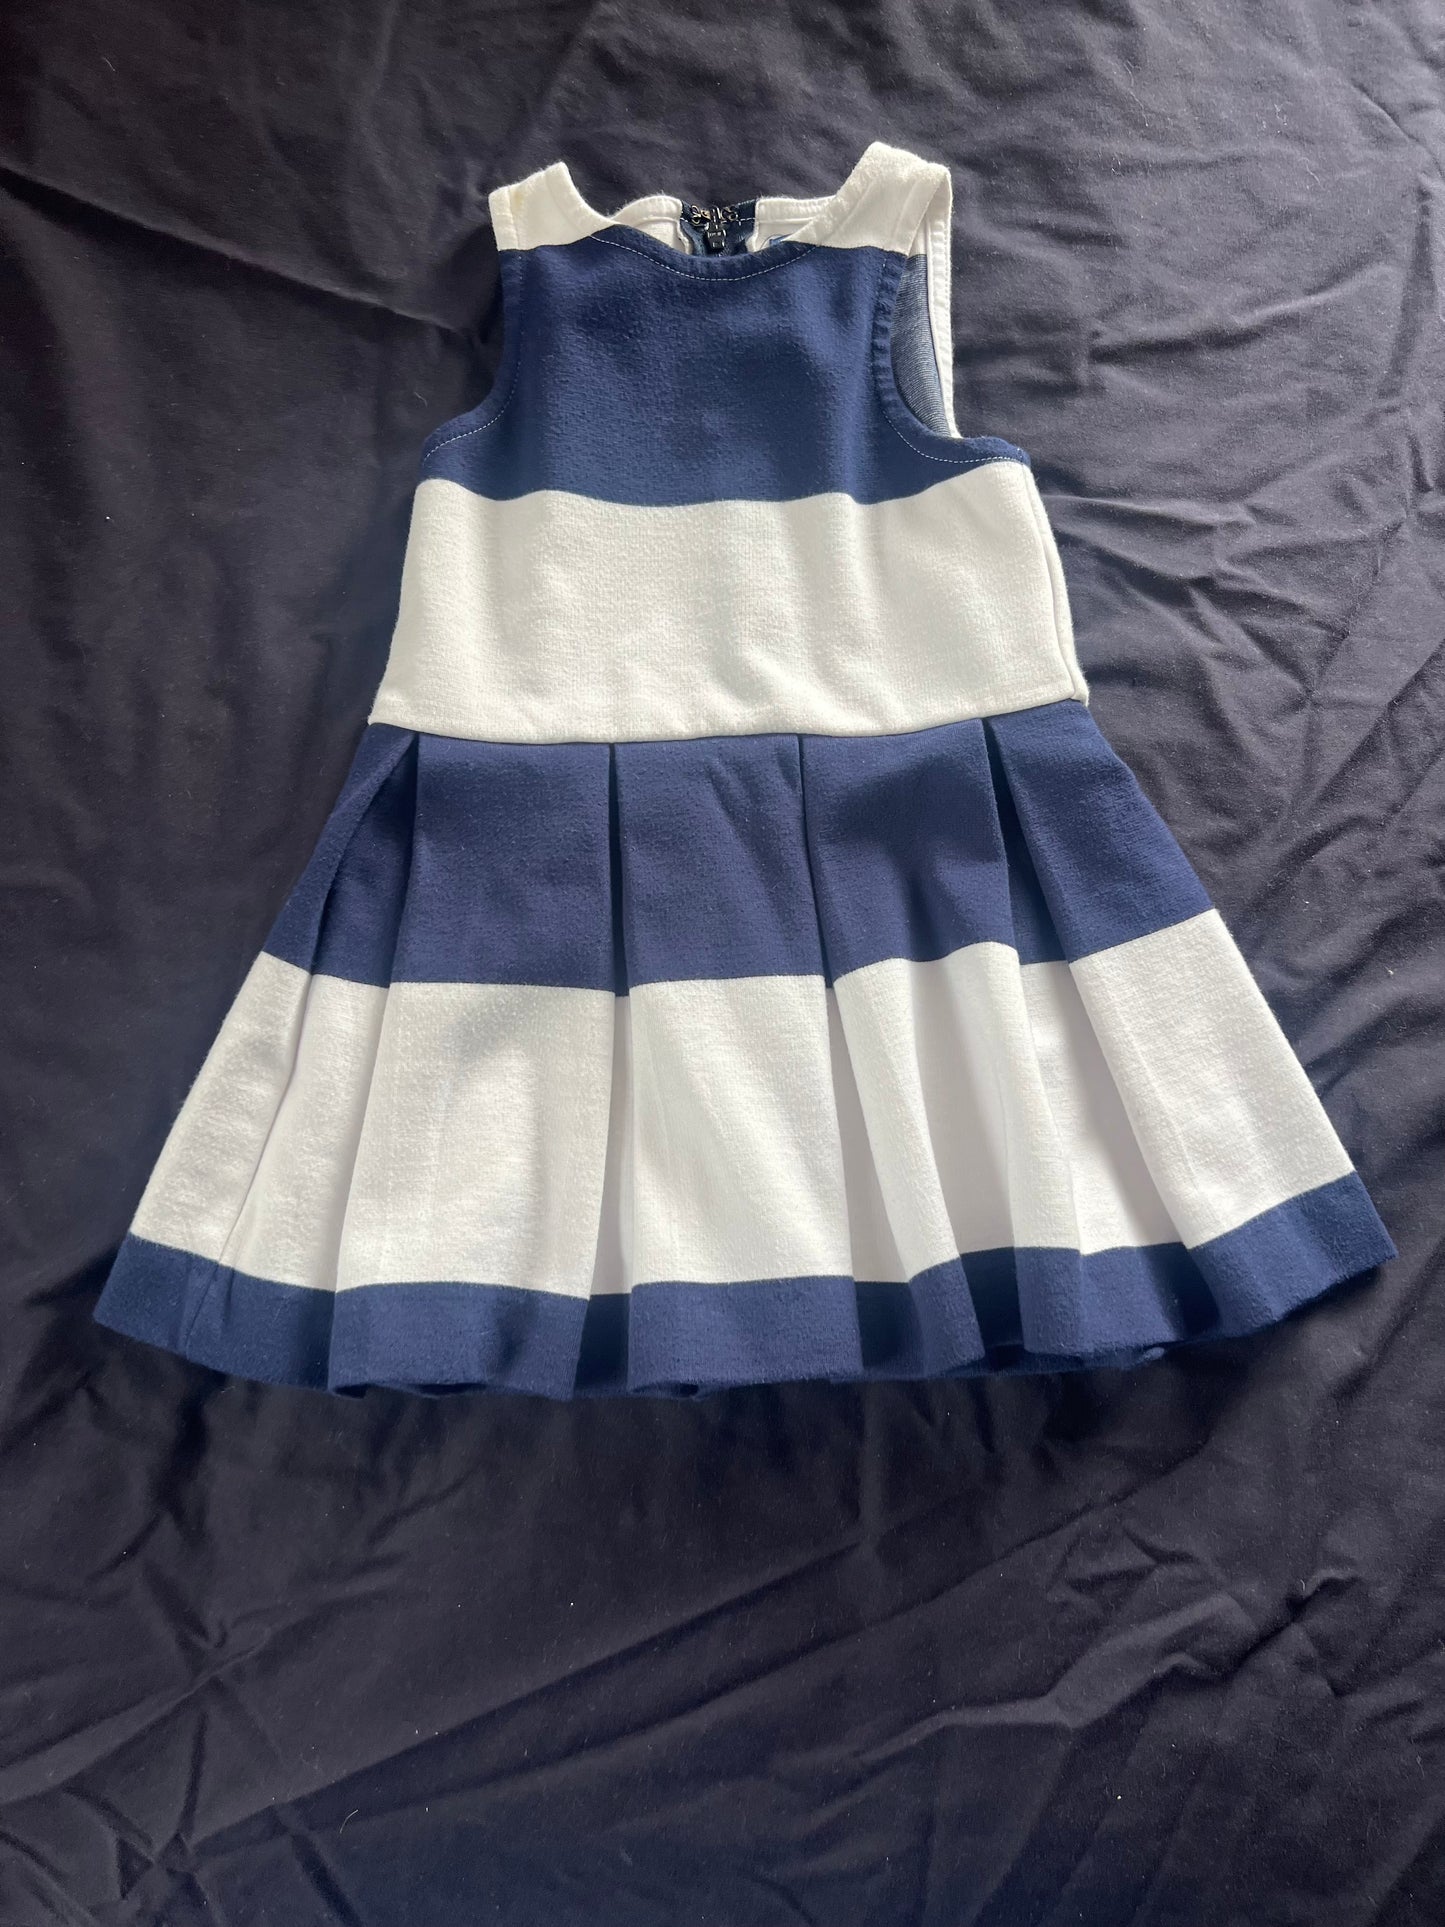 Ralph Lauren Polo Blue & White Dress 2T